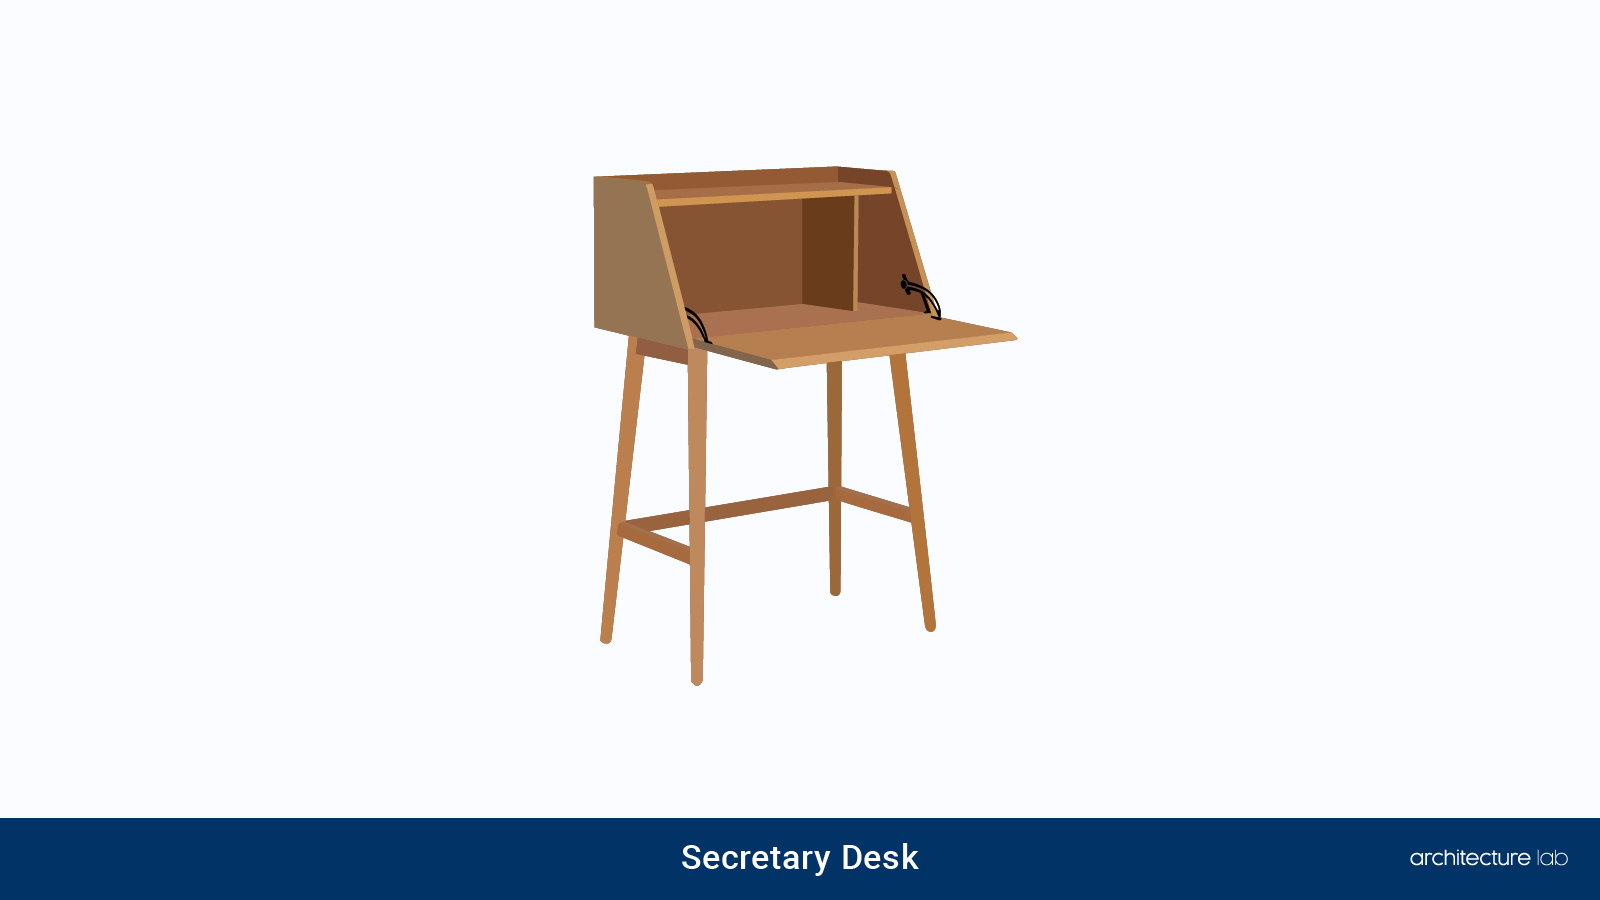 6. Secretary desk